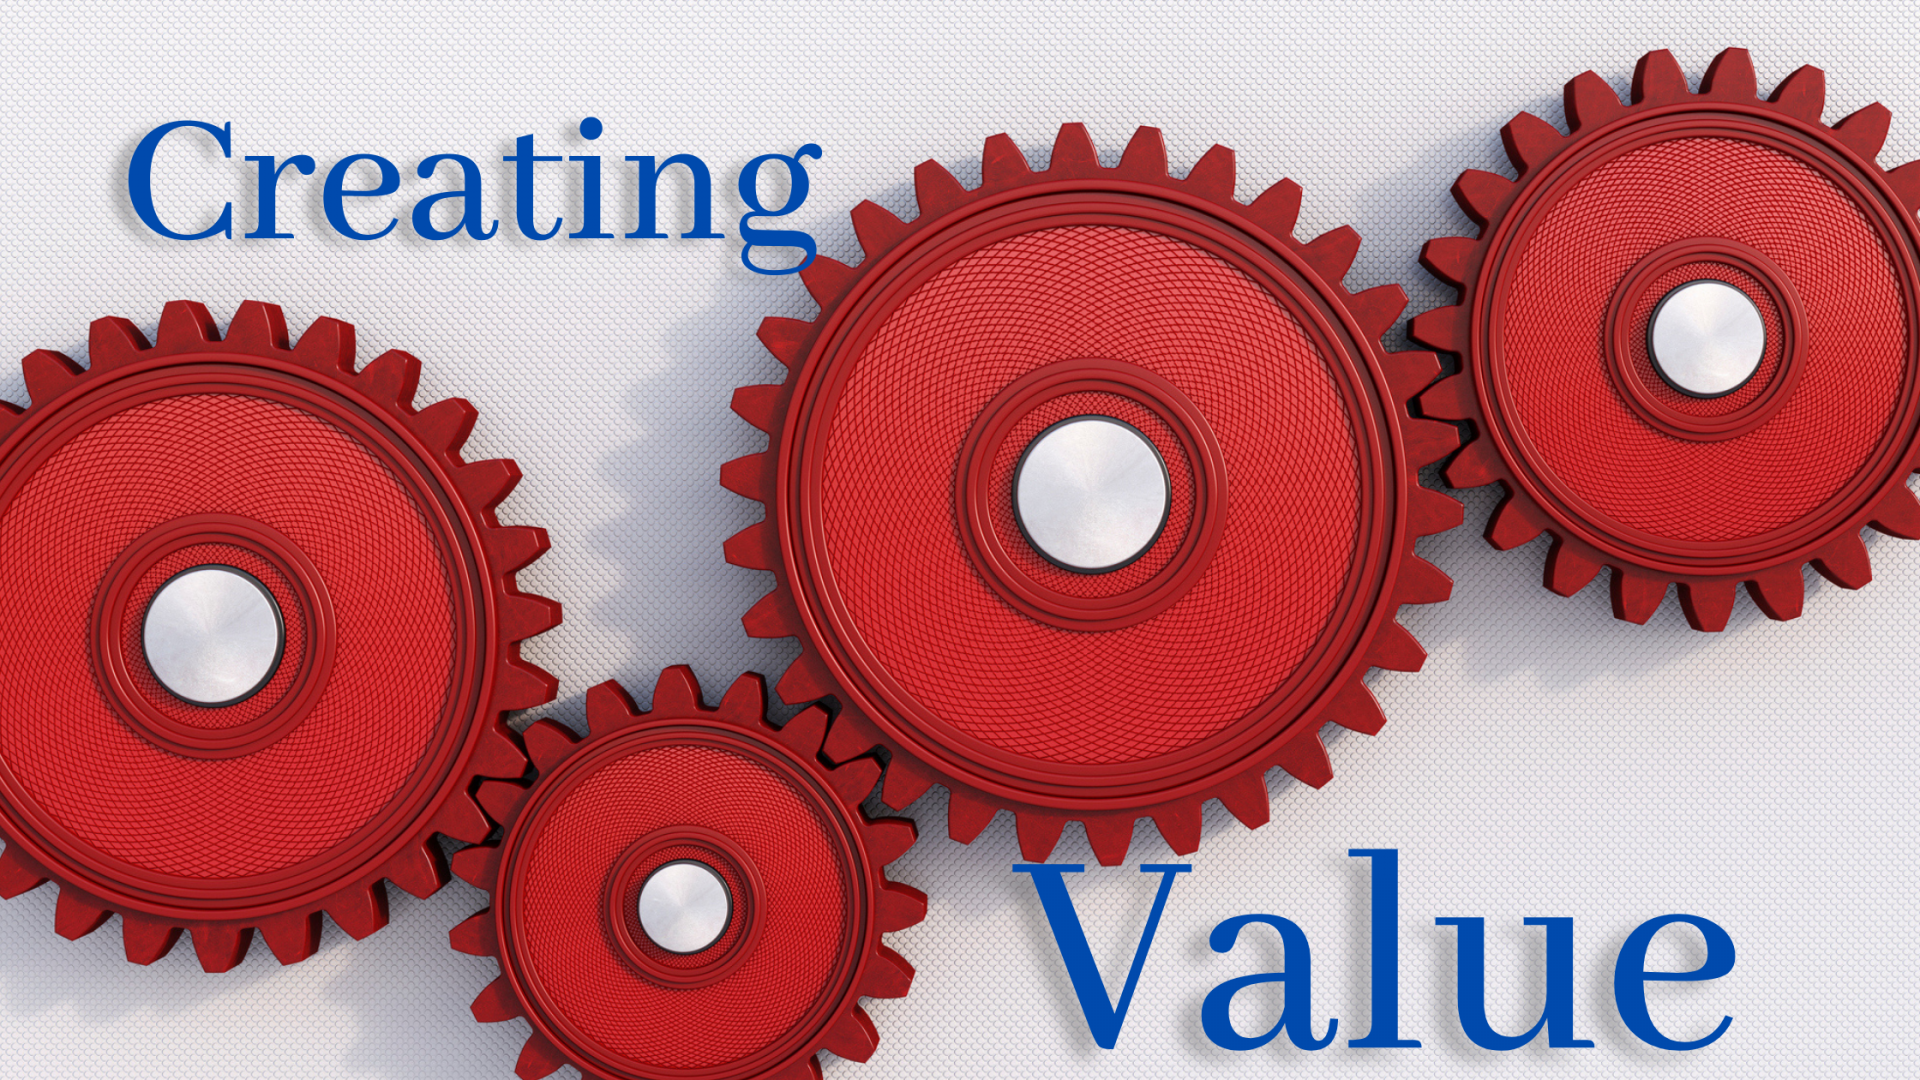 Creating value